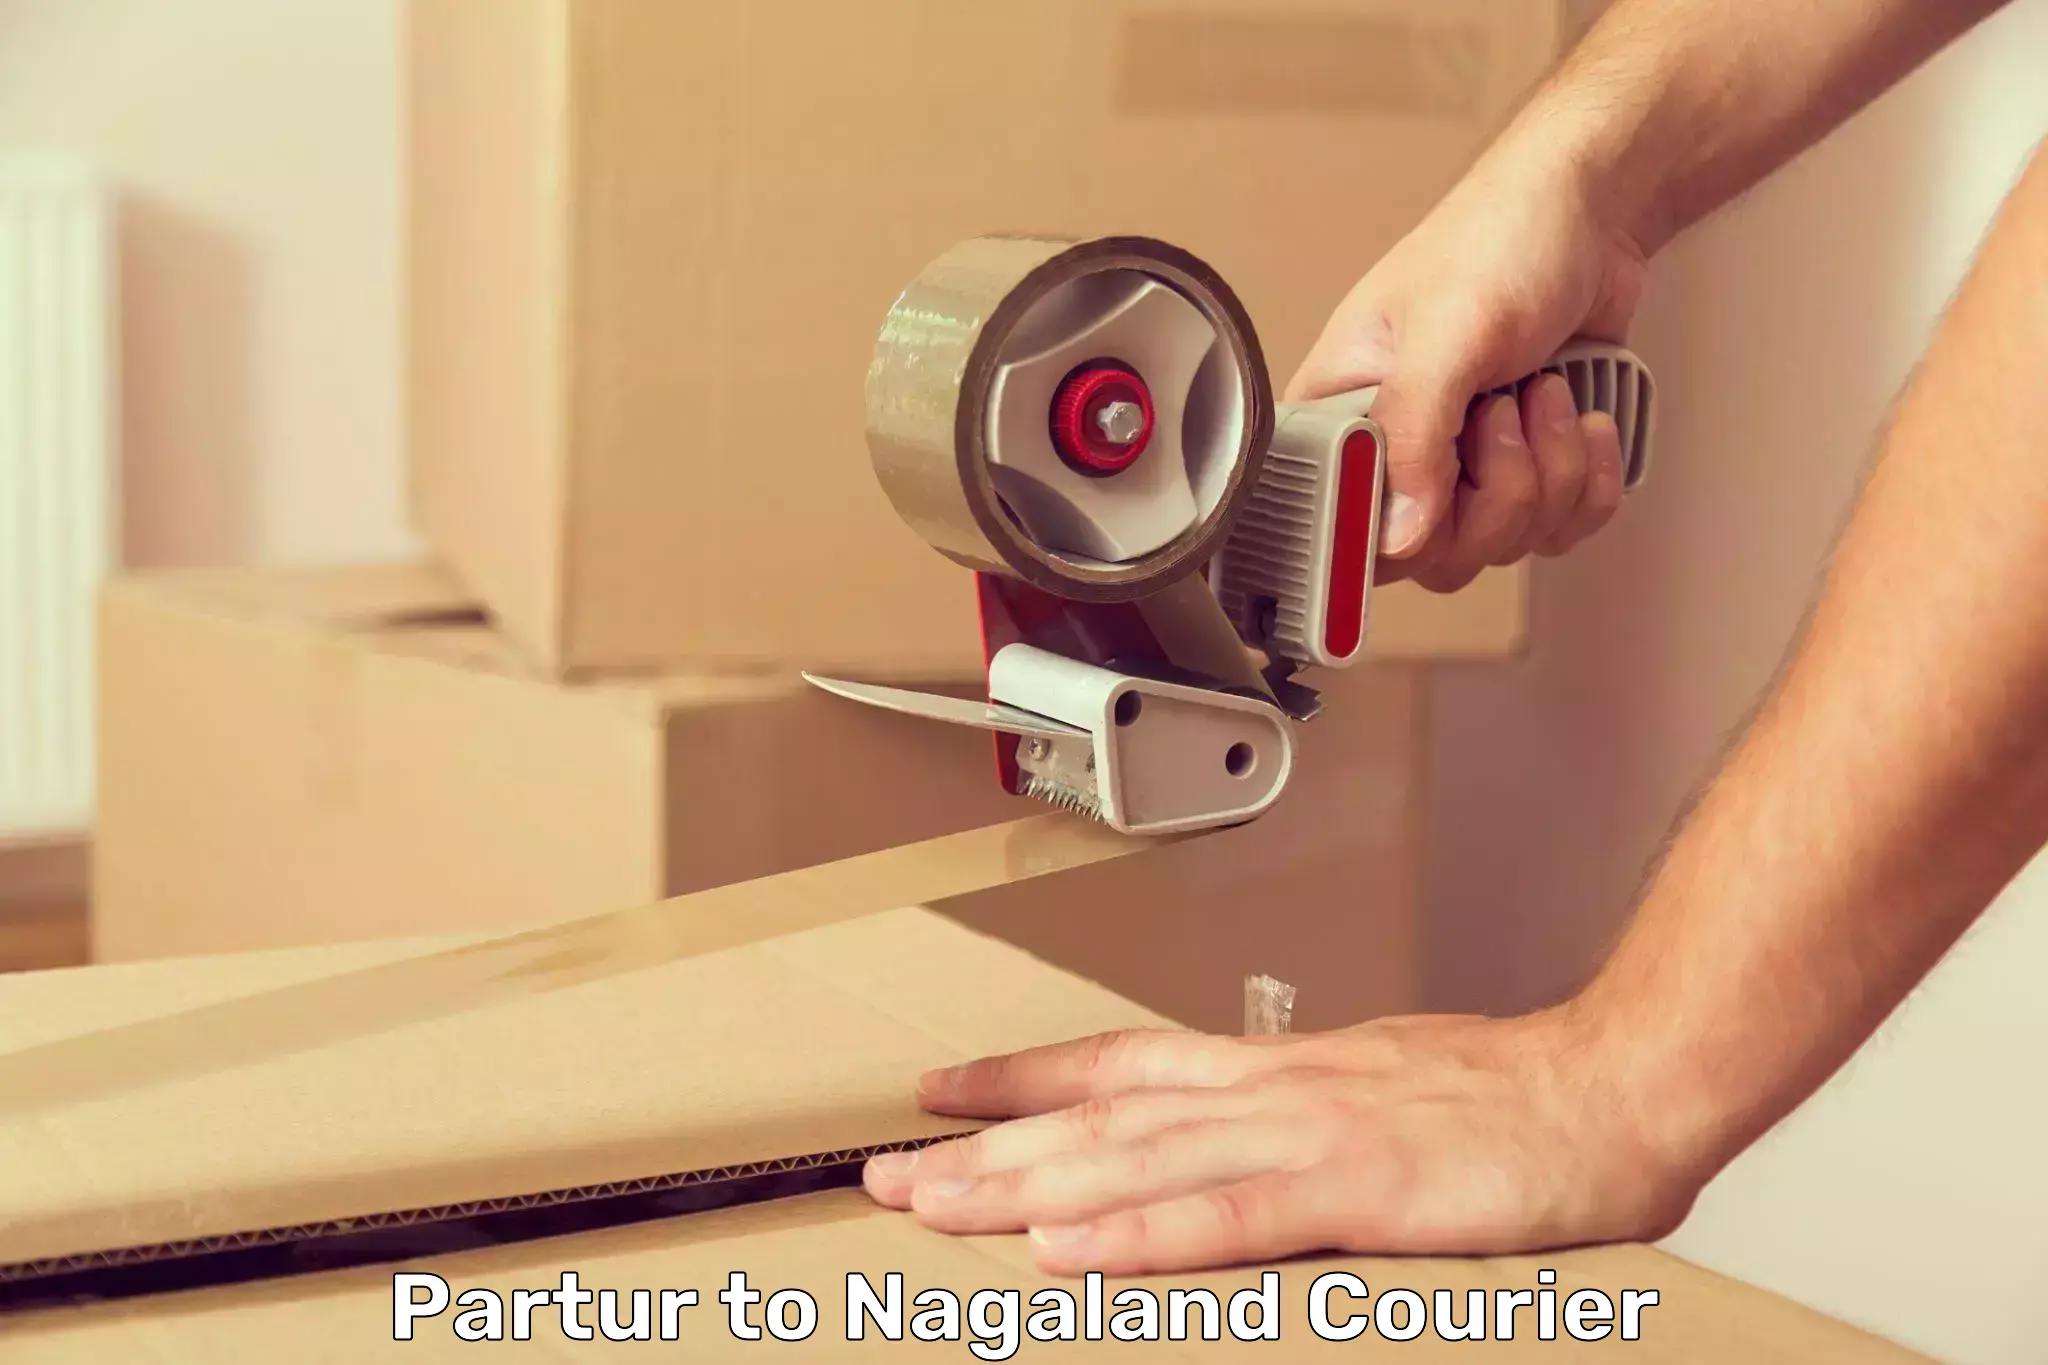 Courier service innovation Partur to Nagaland